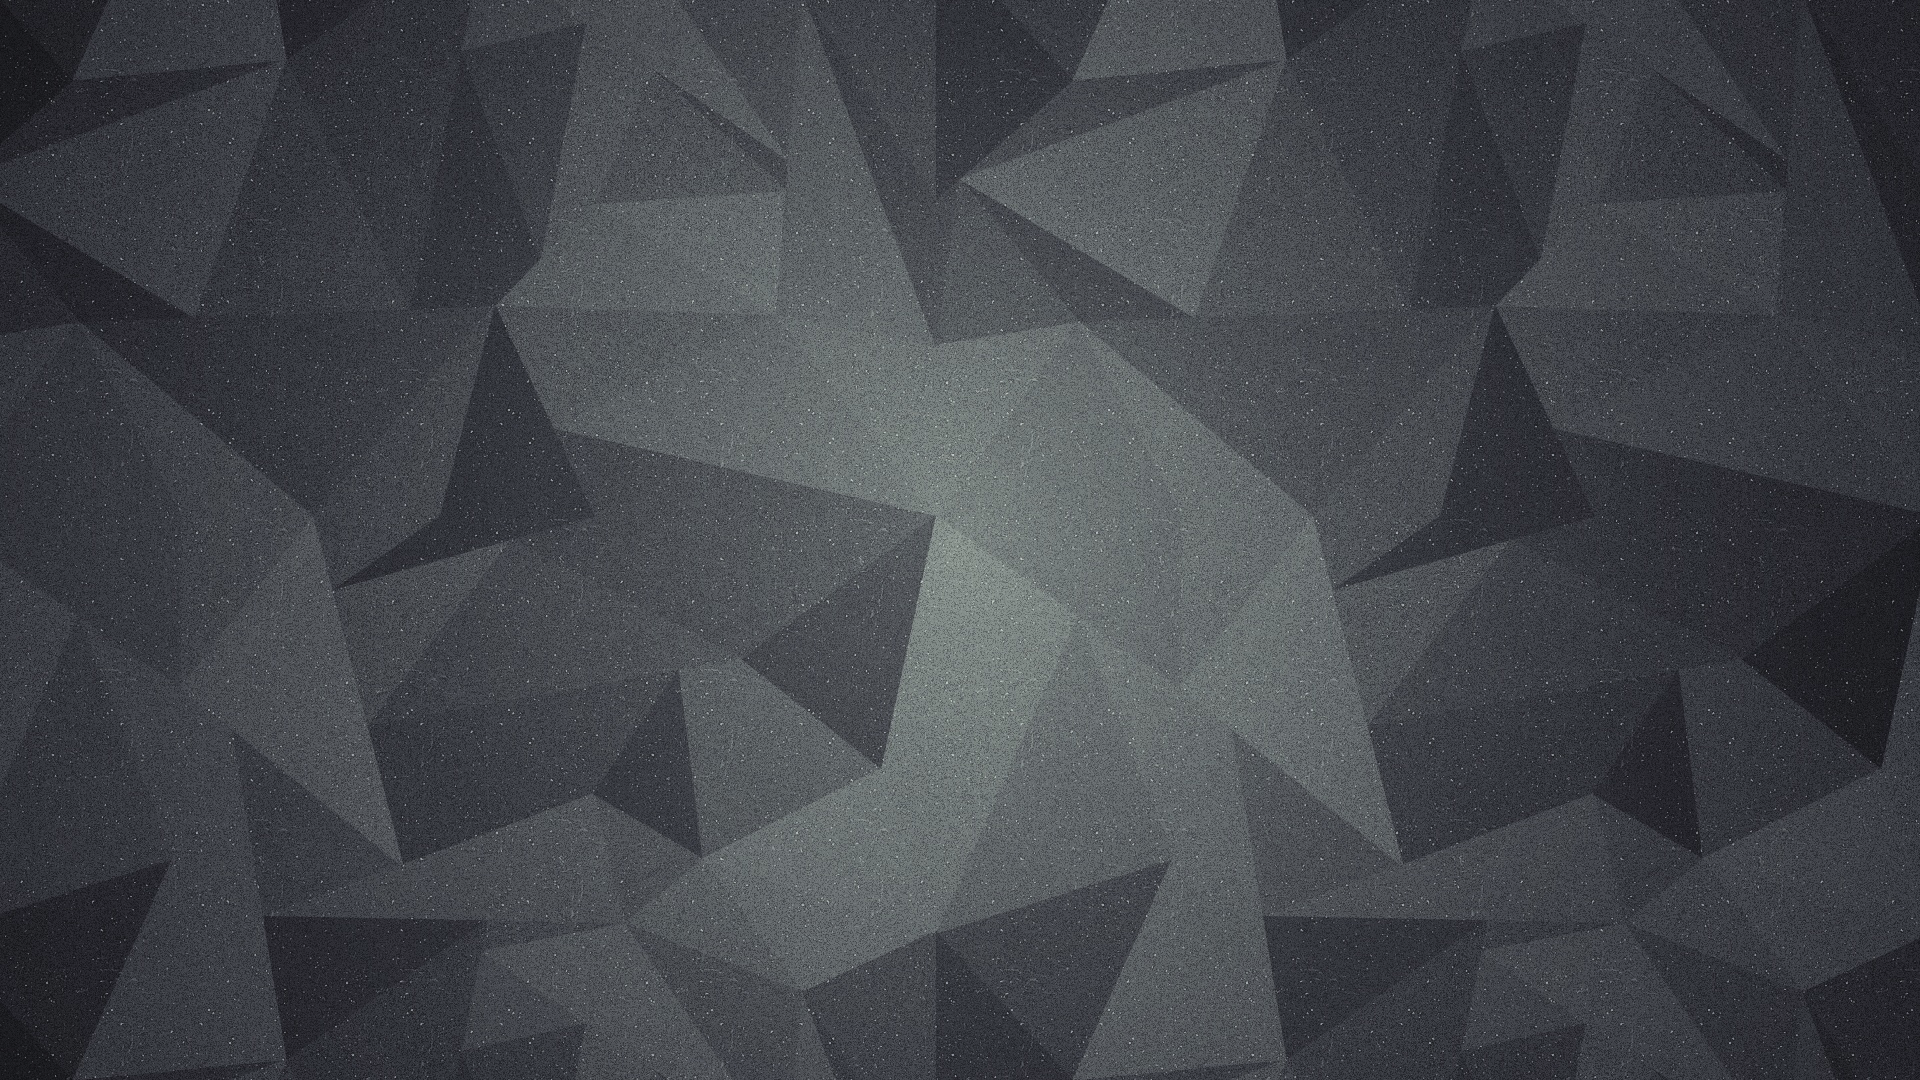  netabstract geometric shapes wallpapers 35720 1920x1080jpg 1920x1080